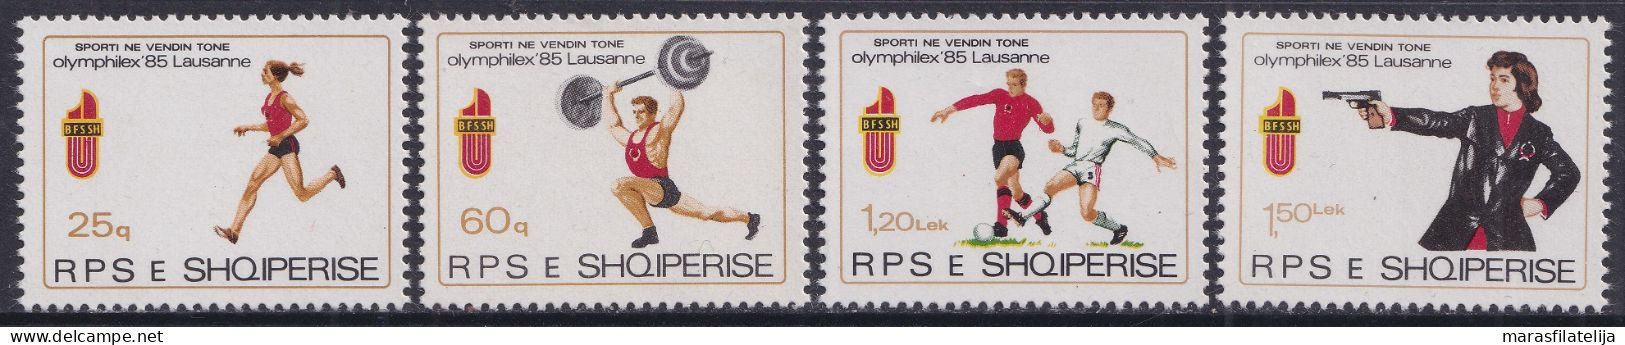 Albania, 1985, Sports Activities In Albania, OLYMPHILEX, Lausanne - Albania